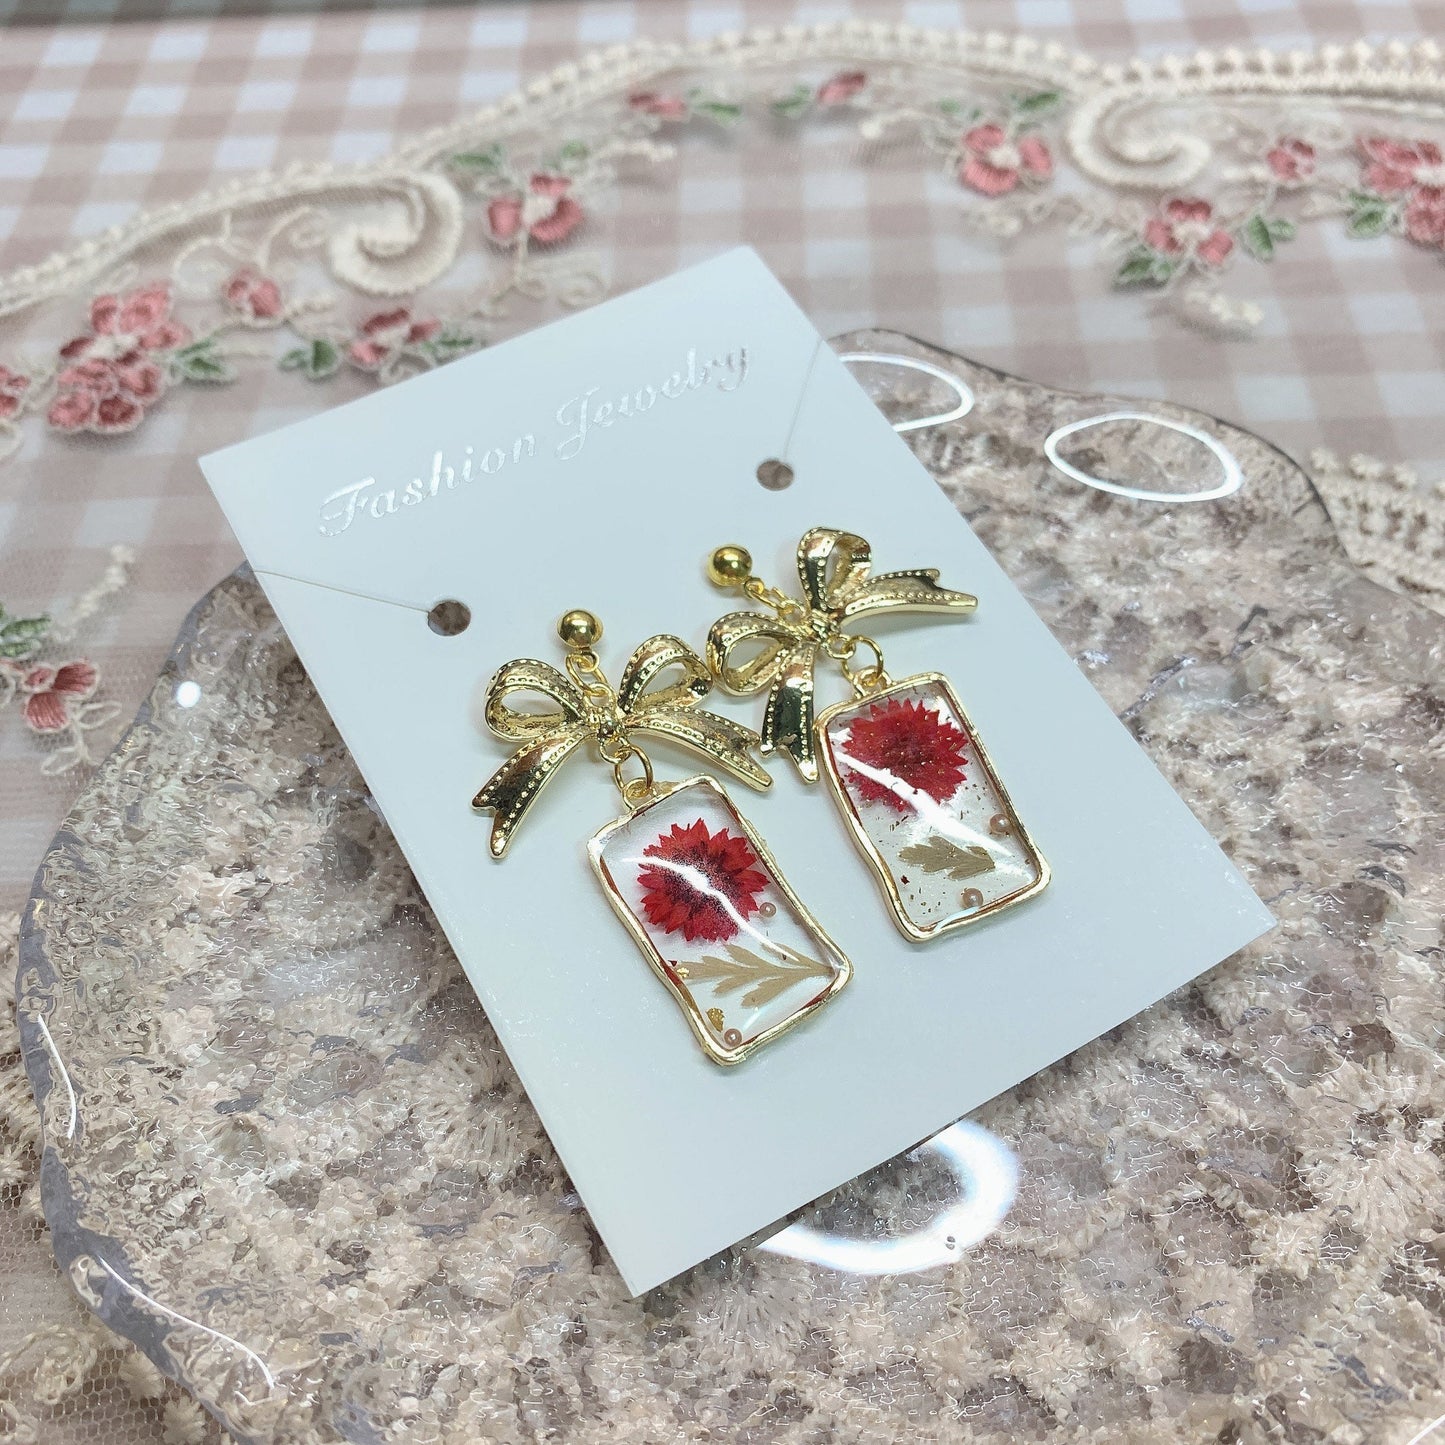 Moya handmade earrings「memory」